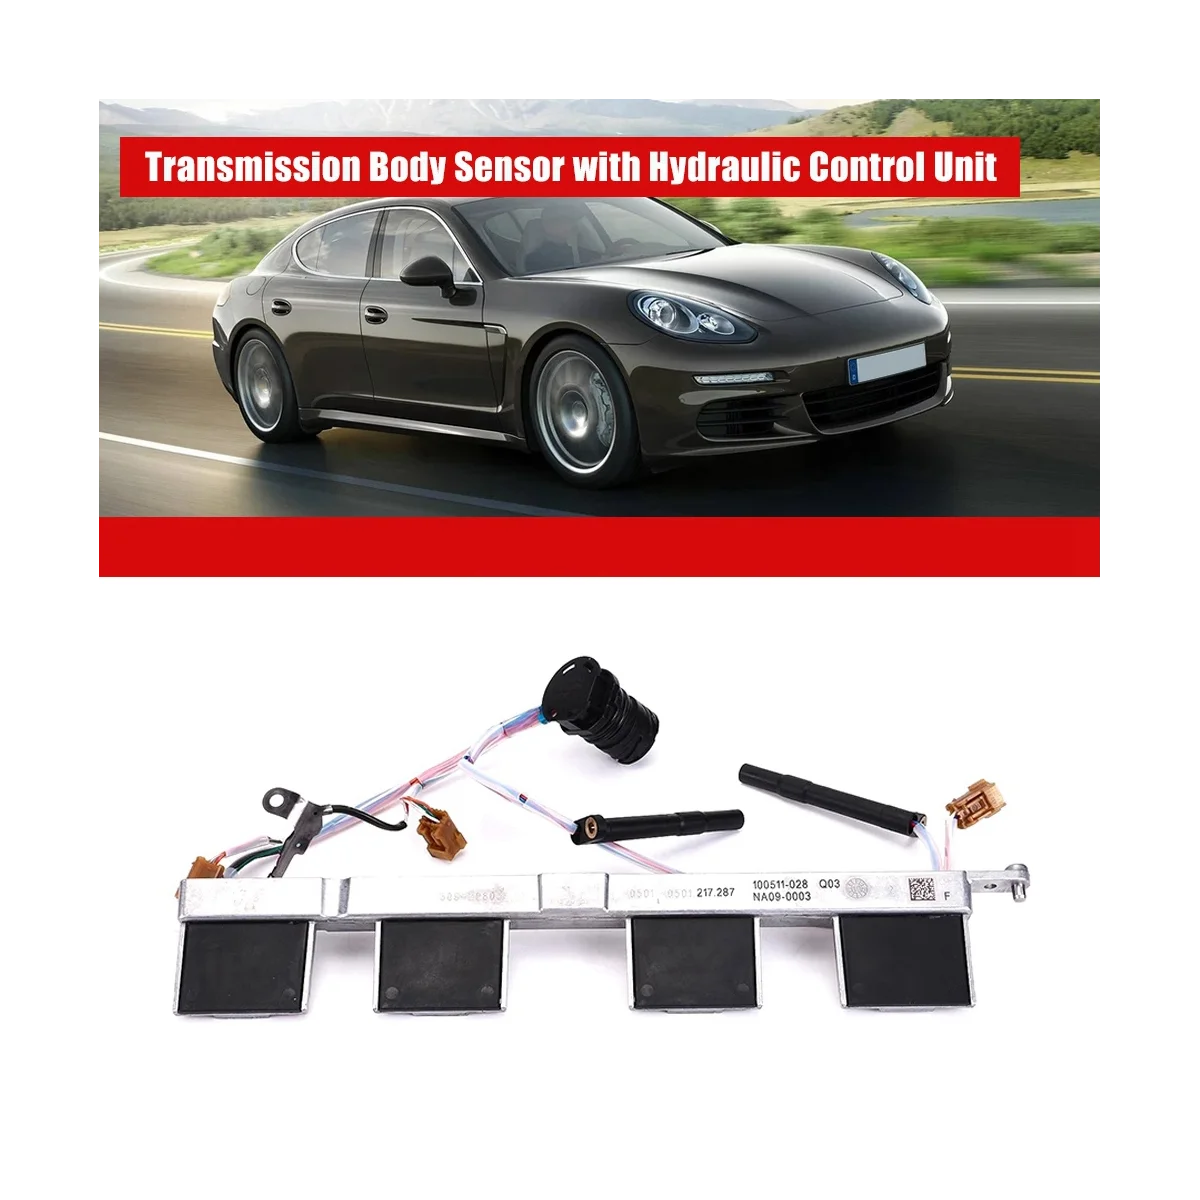 

97031708530 Car Transmission Body Sensor with Hydraulic Control Unit for Porsche Panamera 2010-2016